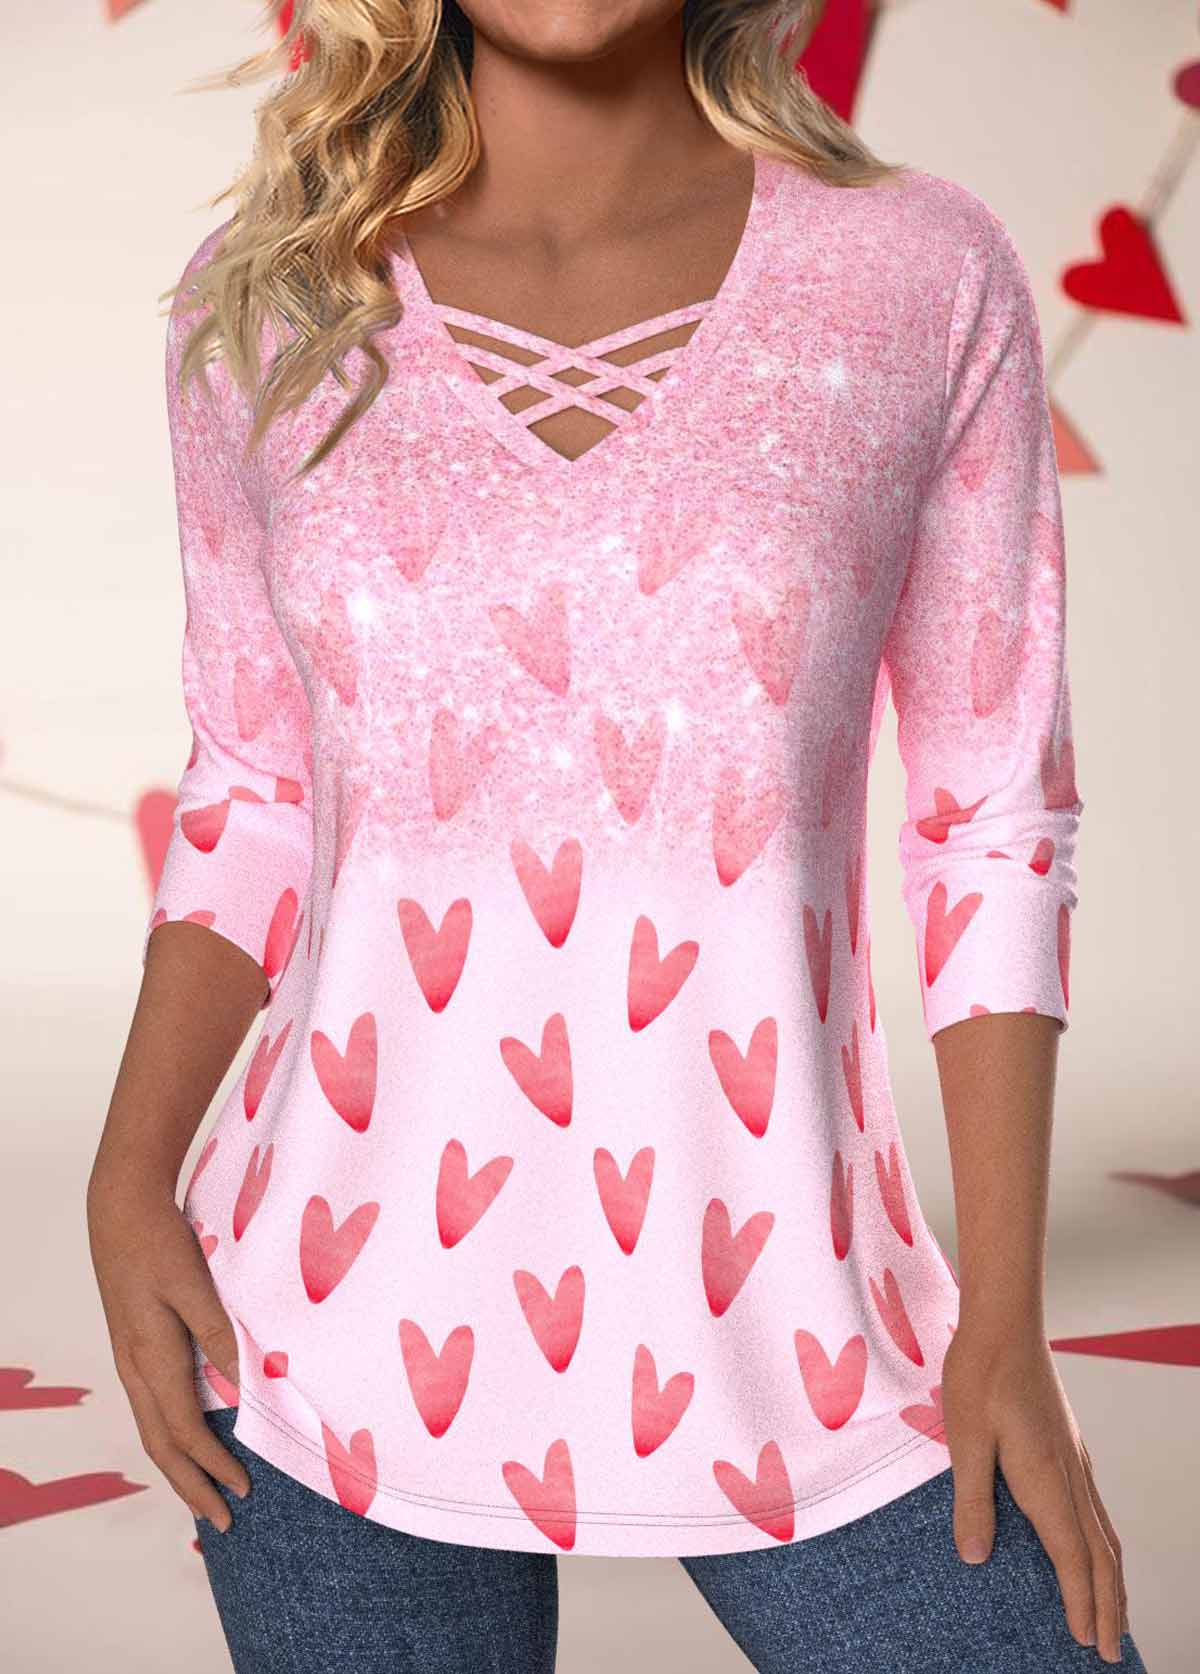 ROTITA Valentine's Day Criss Cross Light Pink T Shirt